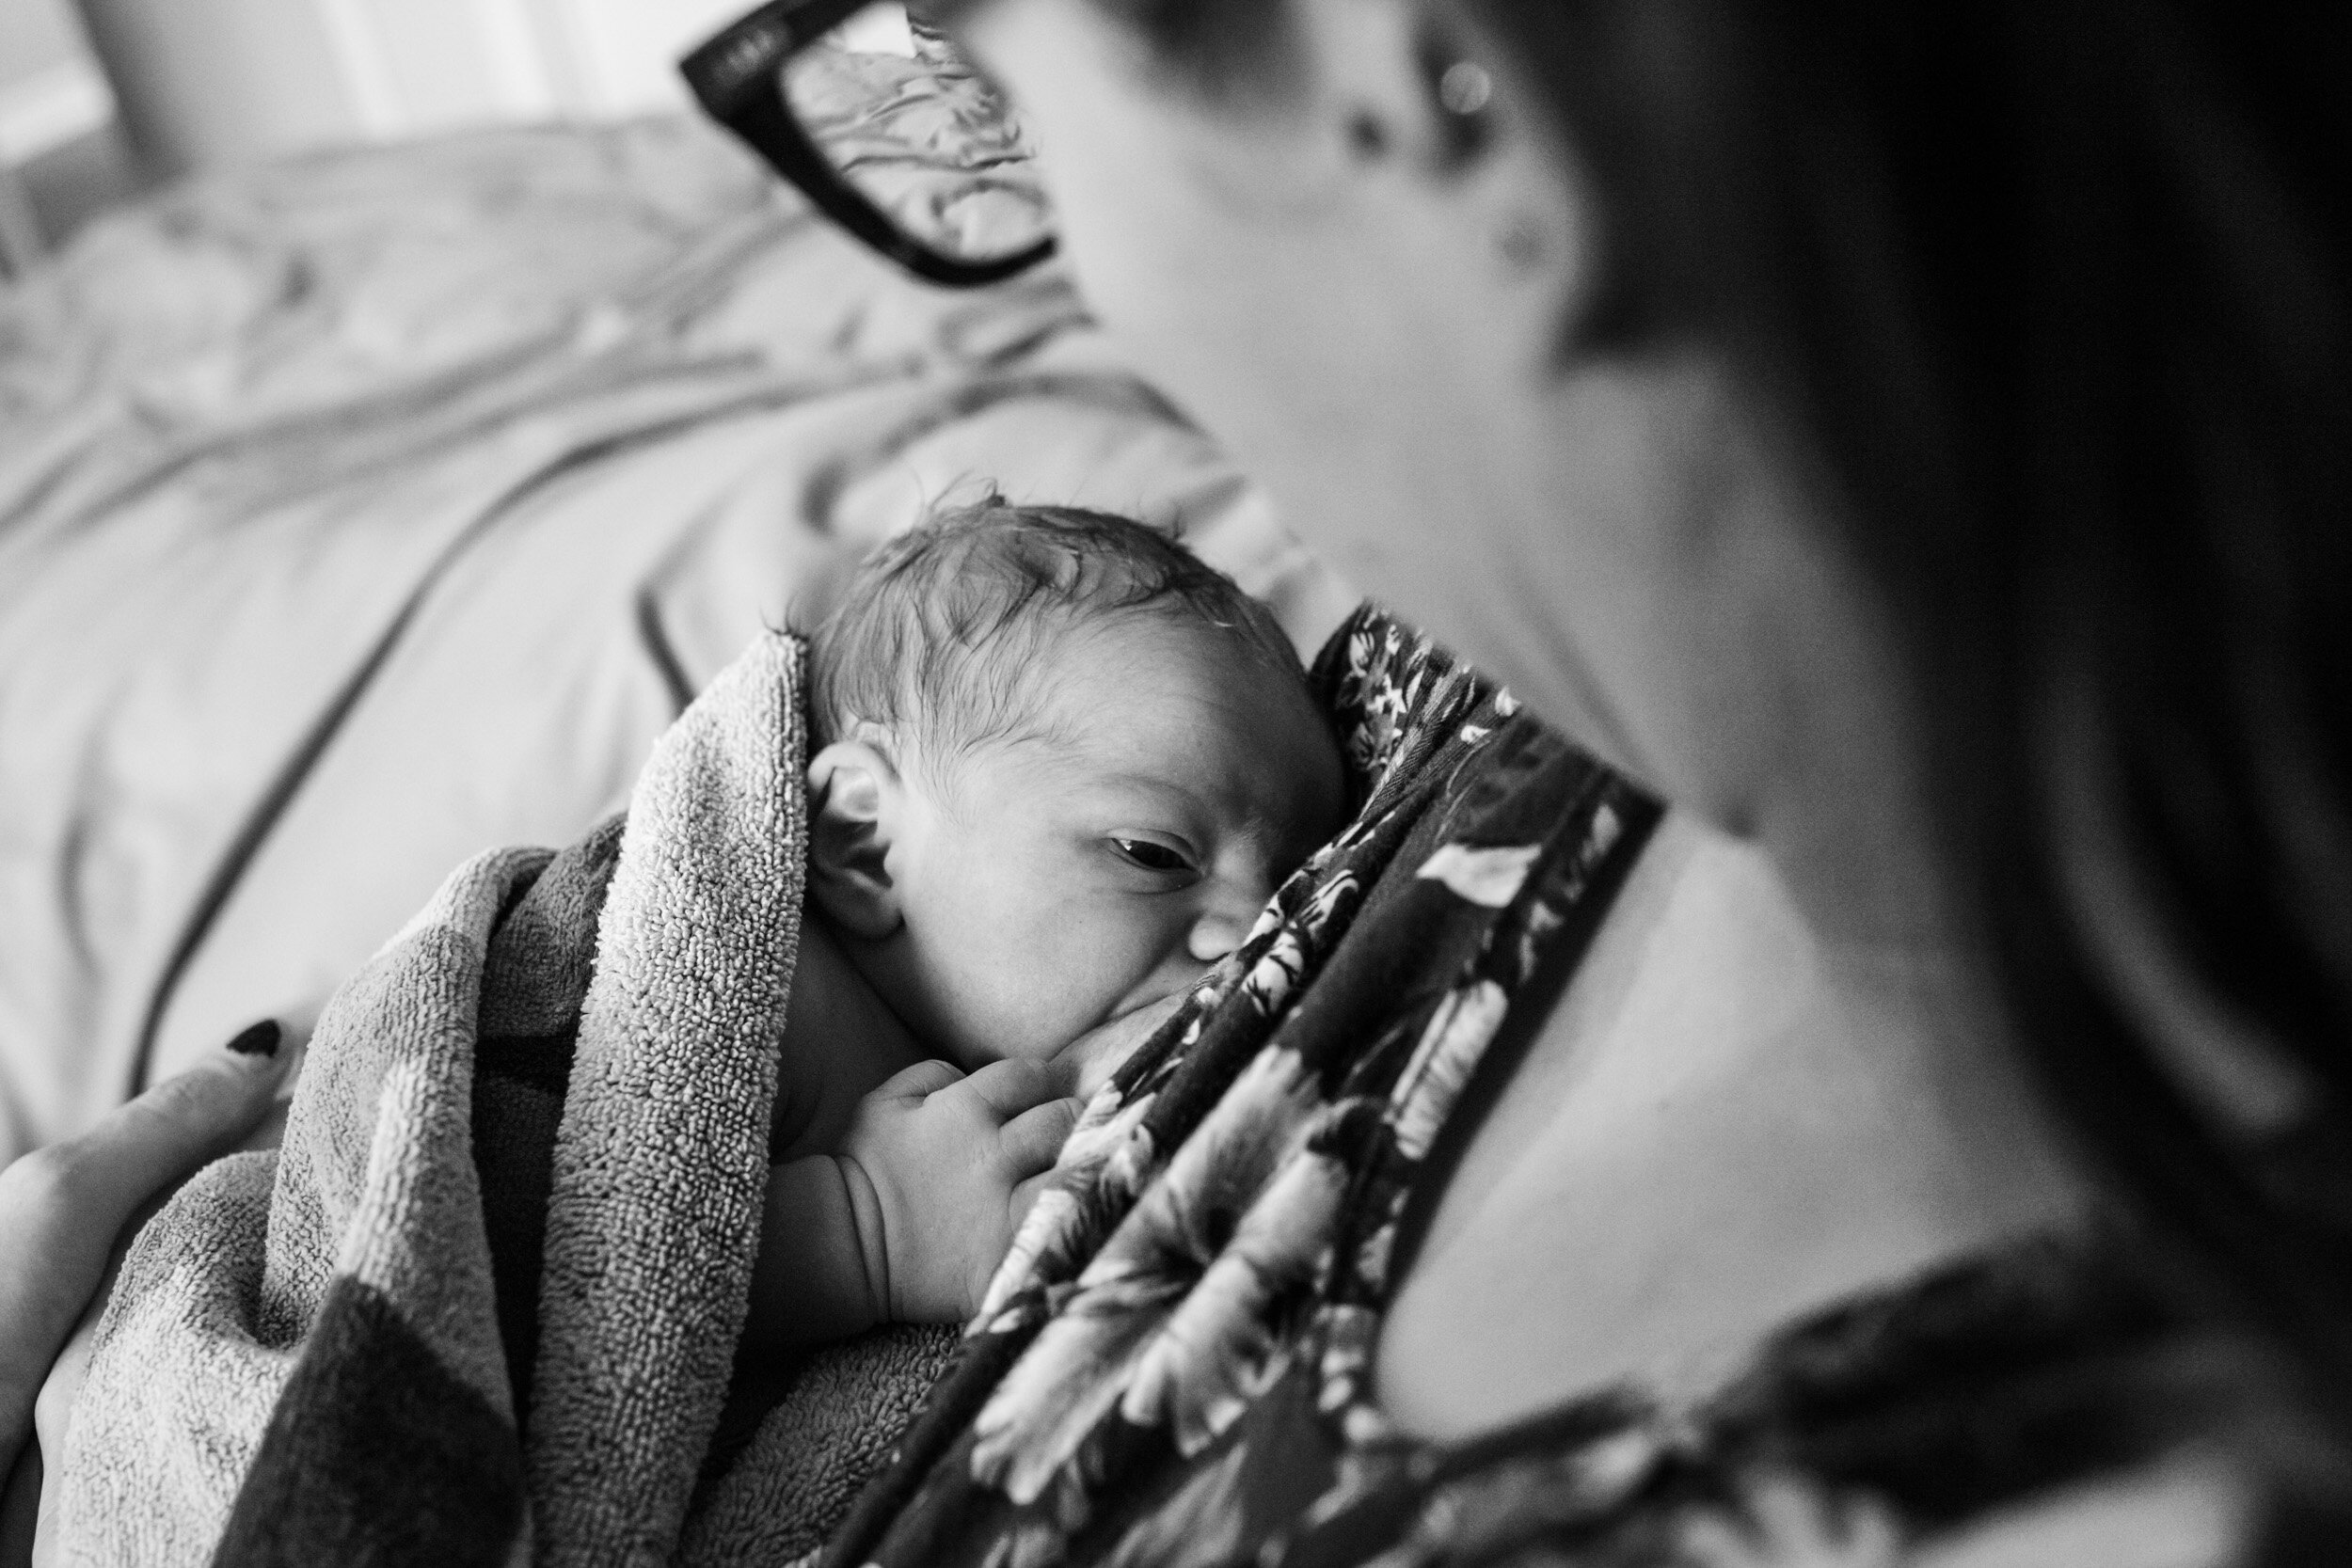 jacksonville beach mom breastfeeding baby just after birth